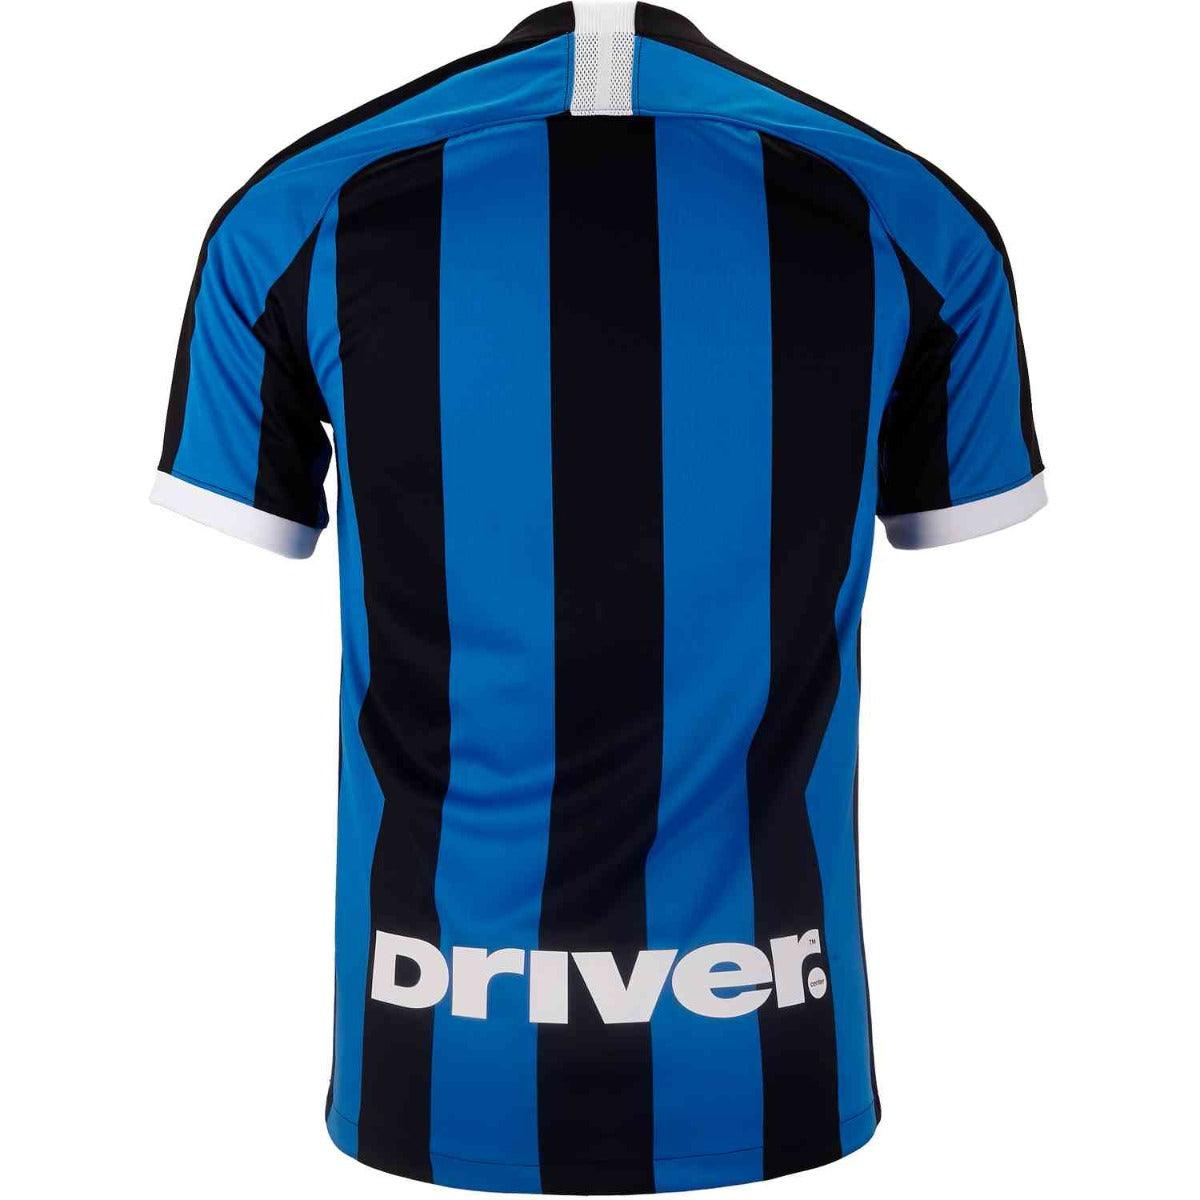 Inter Milan 2019-2020 Home Jersey - Obeezi.com